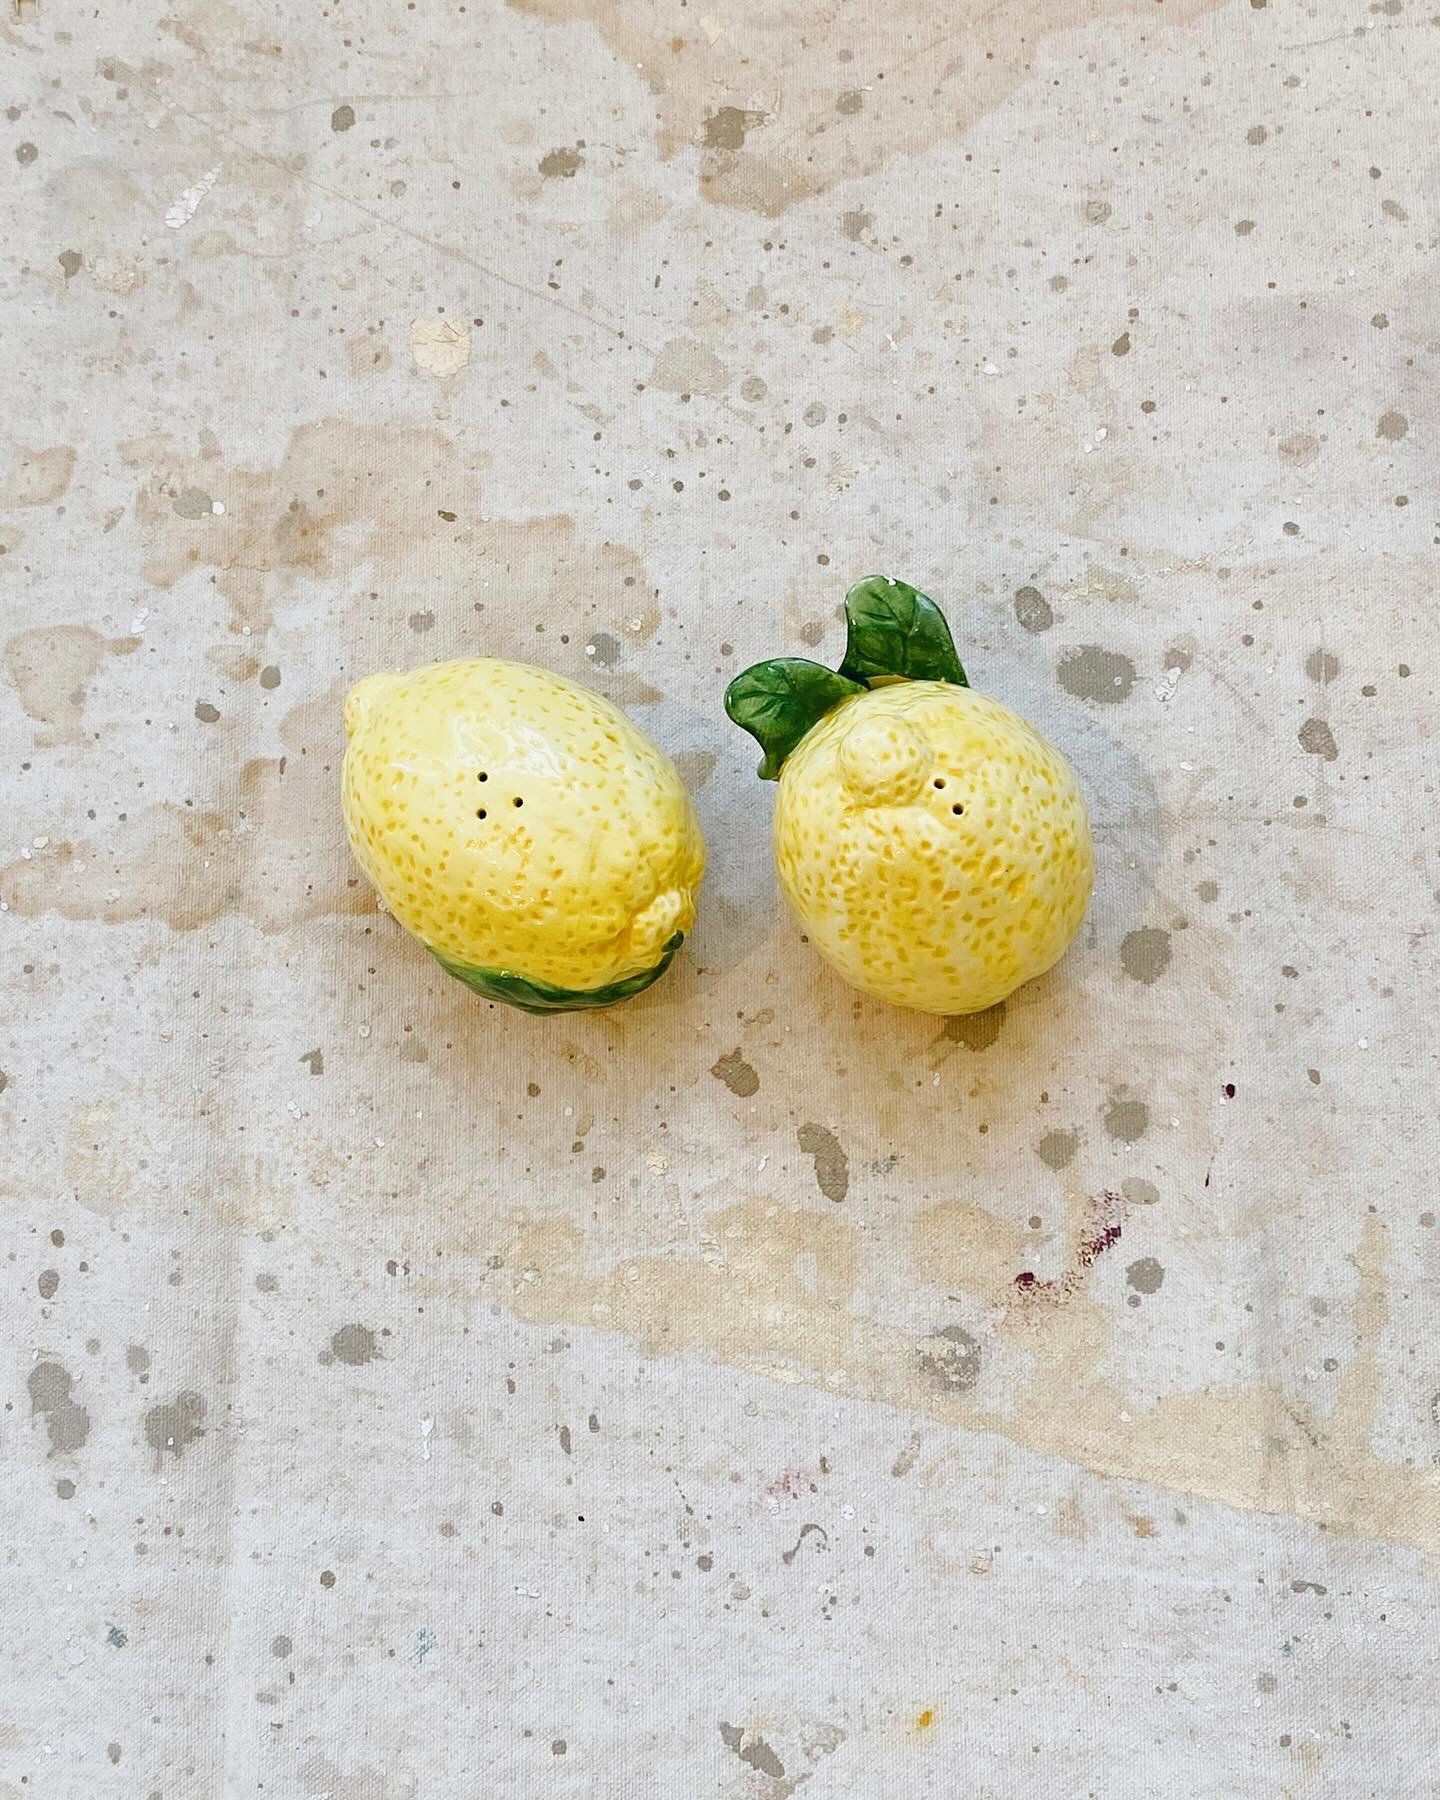 citrusy solids 🍋

#vintageclothing #italianvintage #lemon #citrus #summervintage